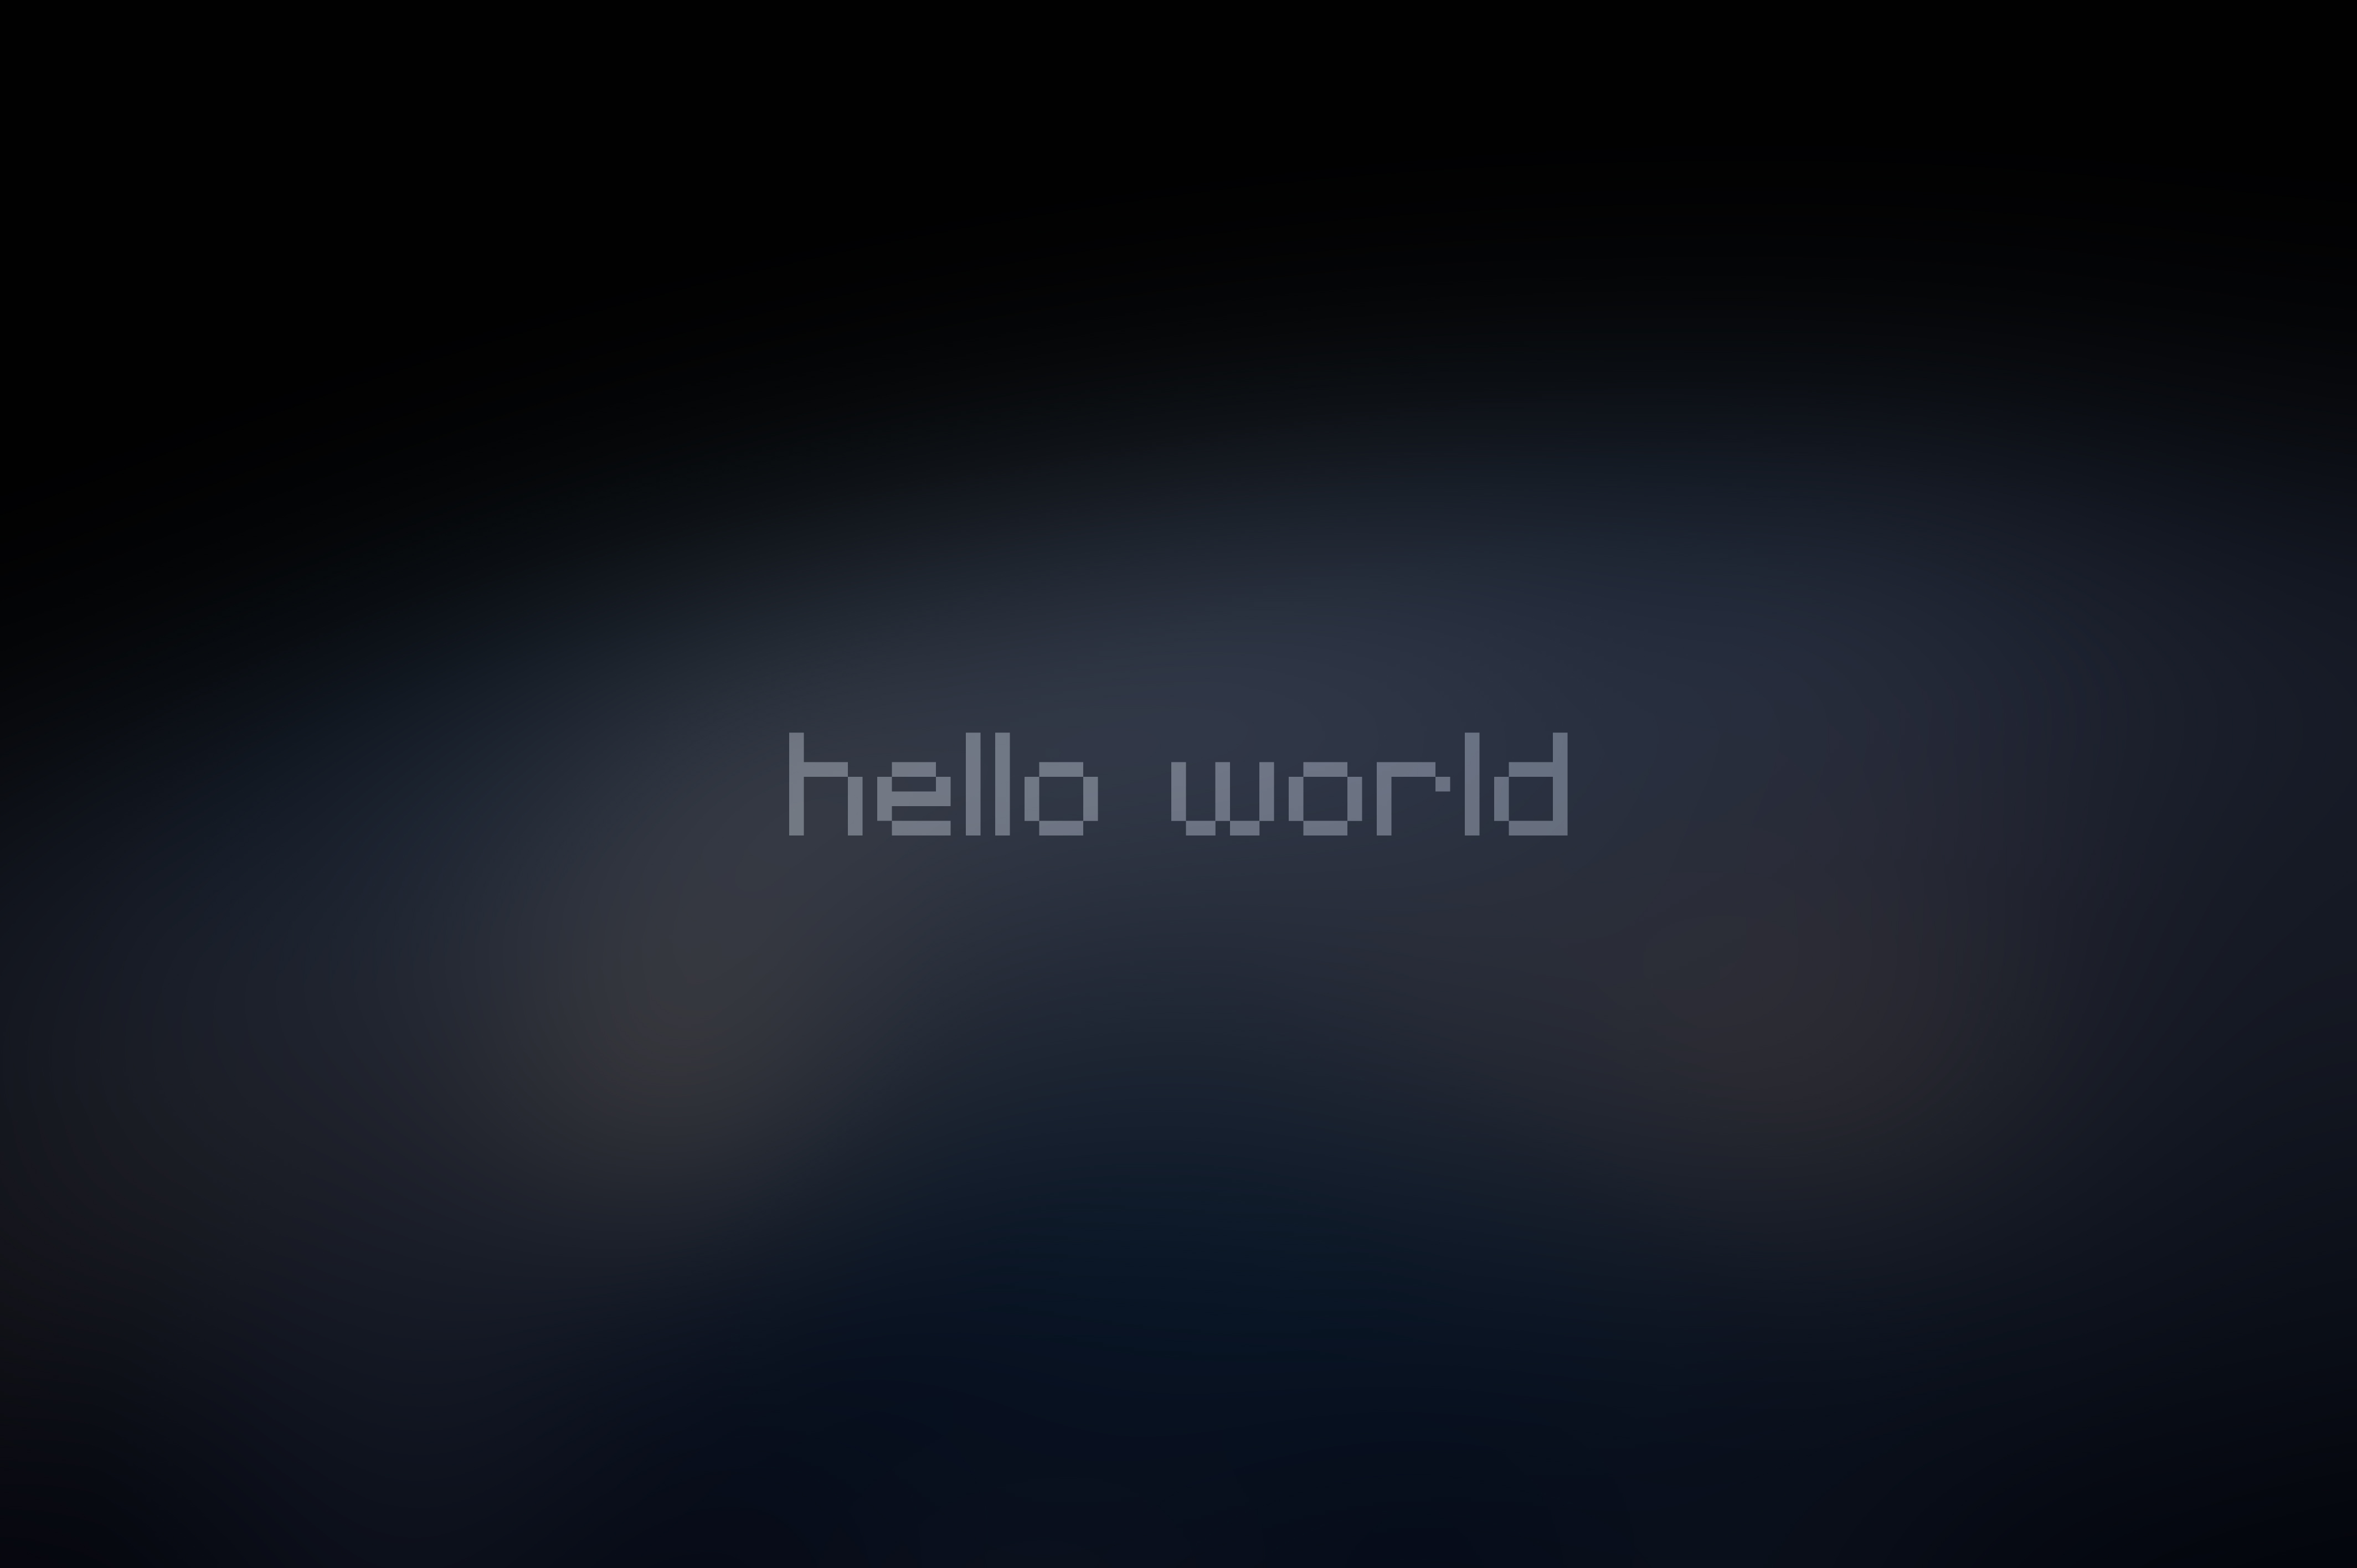 hello world wallpaper,black,text,font,sky,darkness